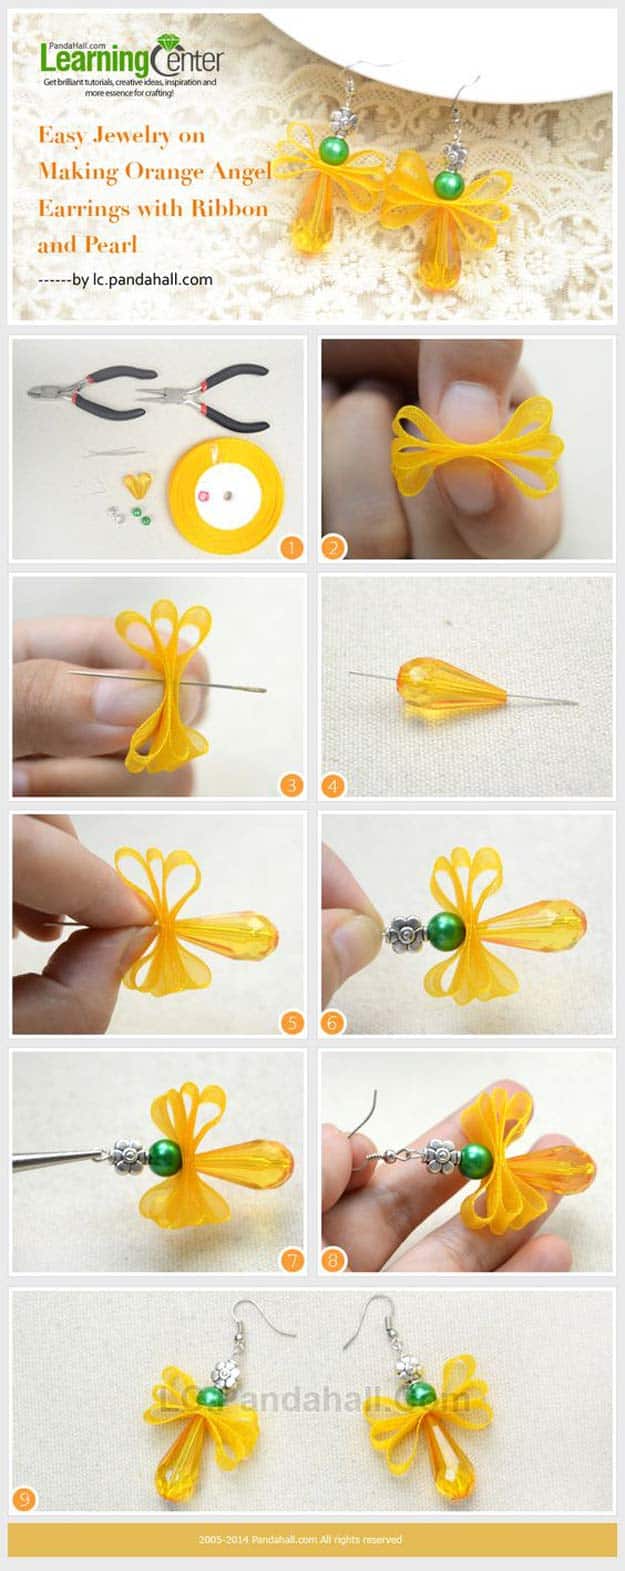 Create Orange Angel Earrings with Ribbon and Pearl